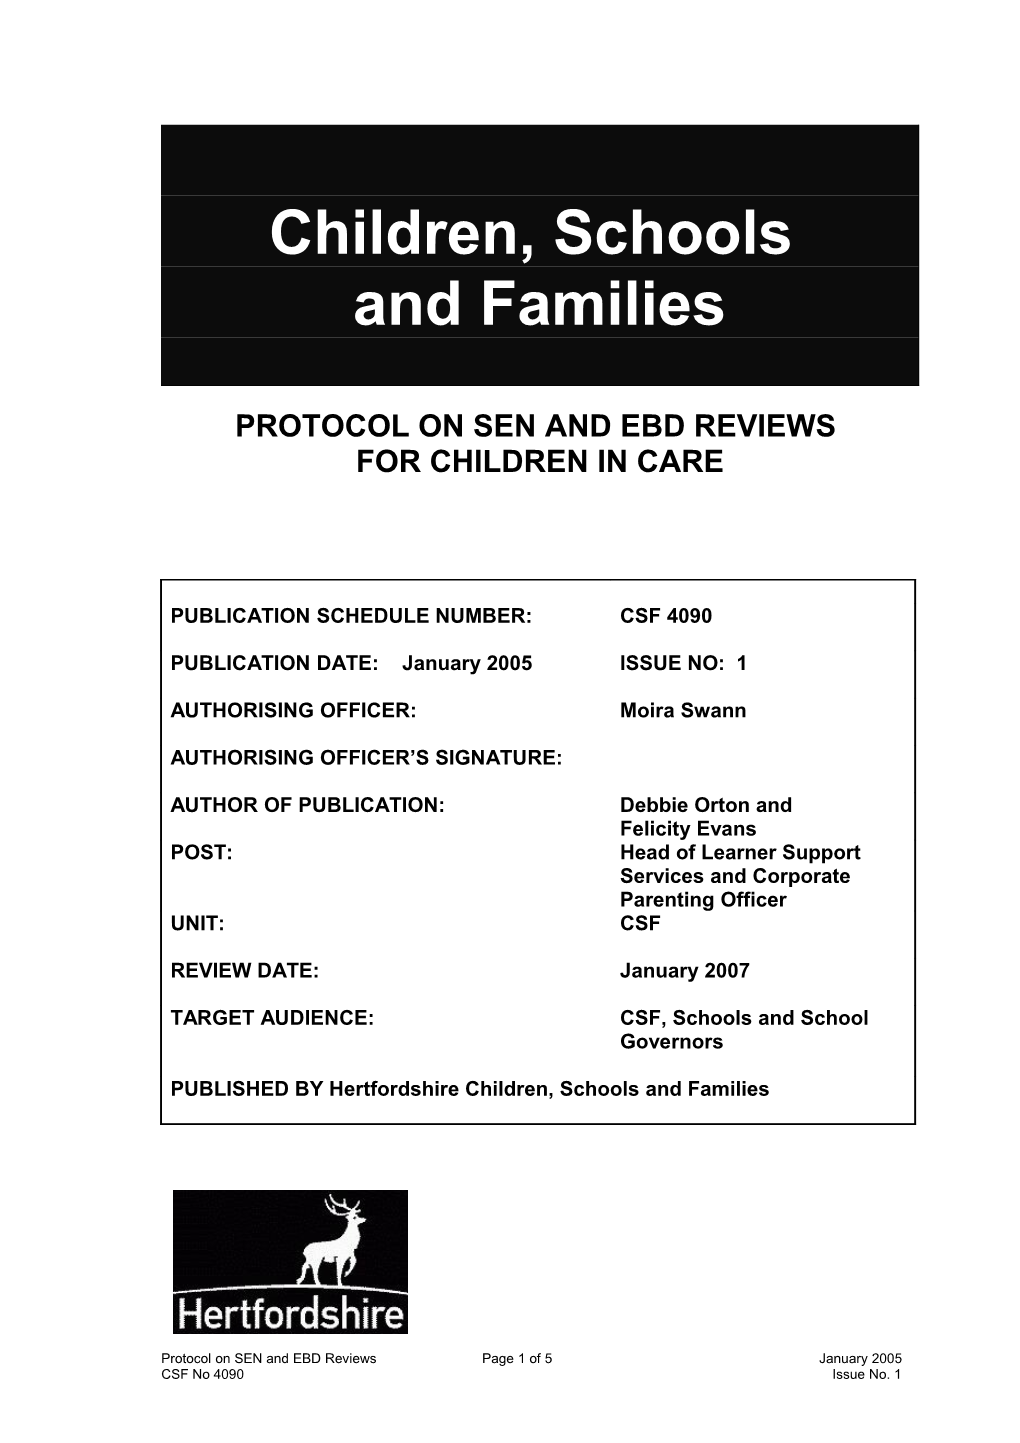 Protocol on Sen and Ebd Reviews